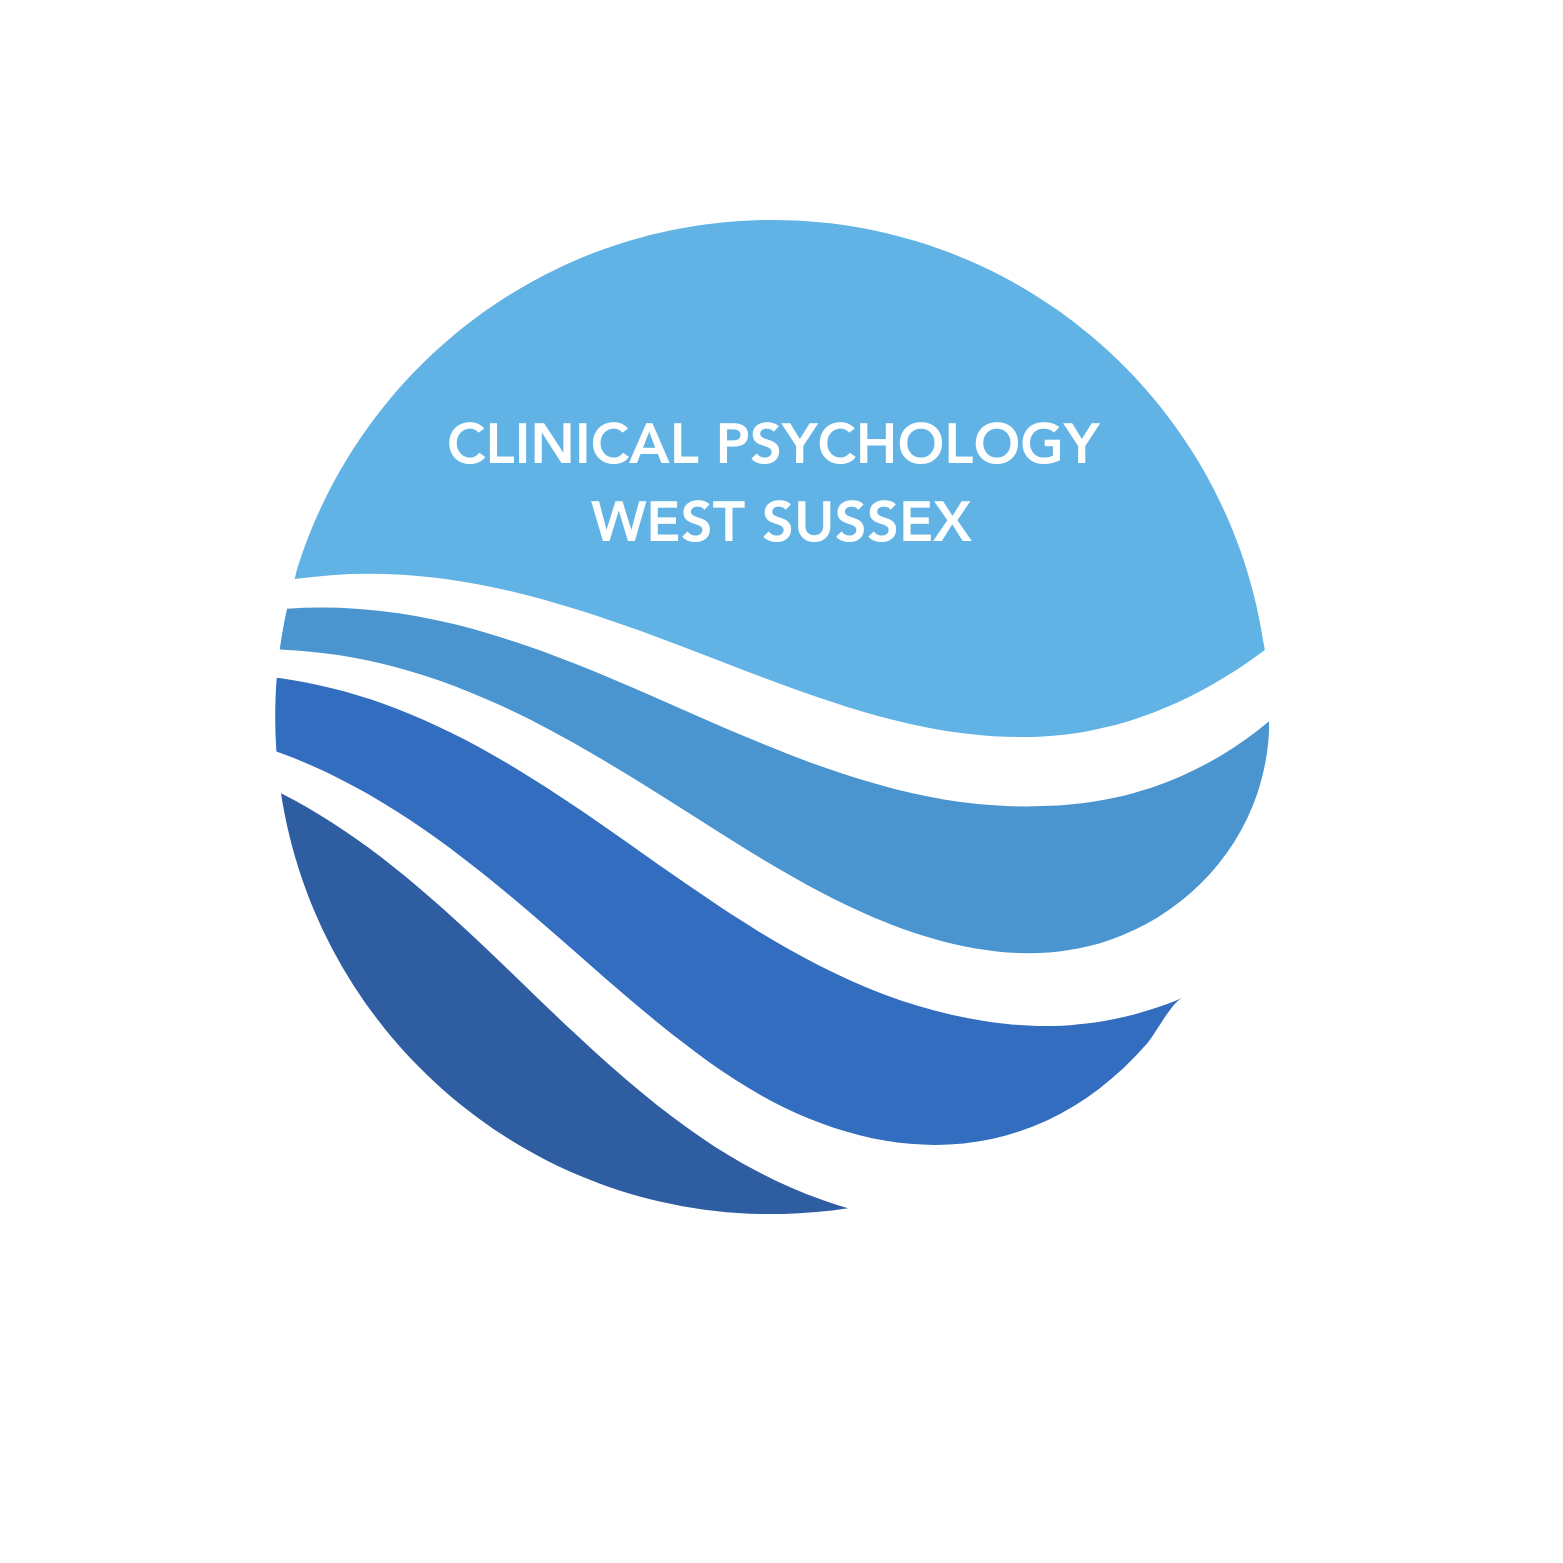 Clinical Psychology West Sussex